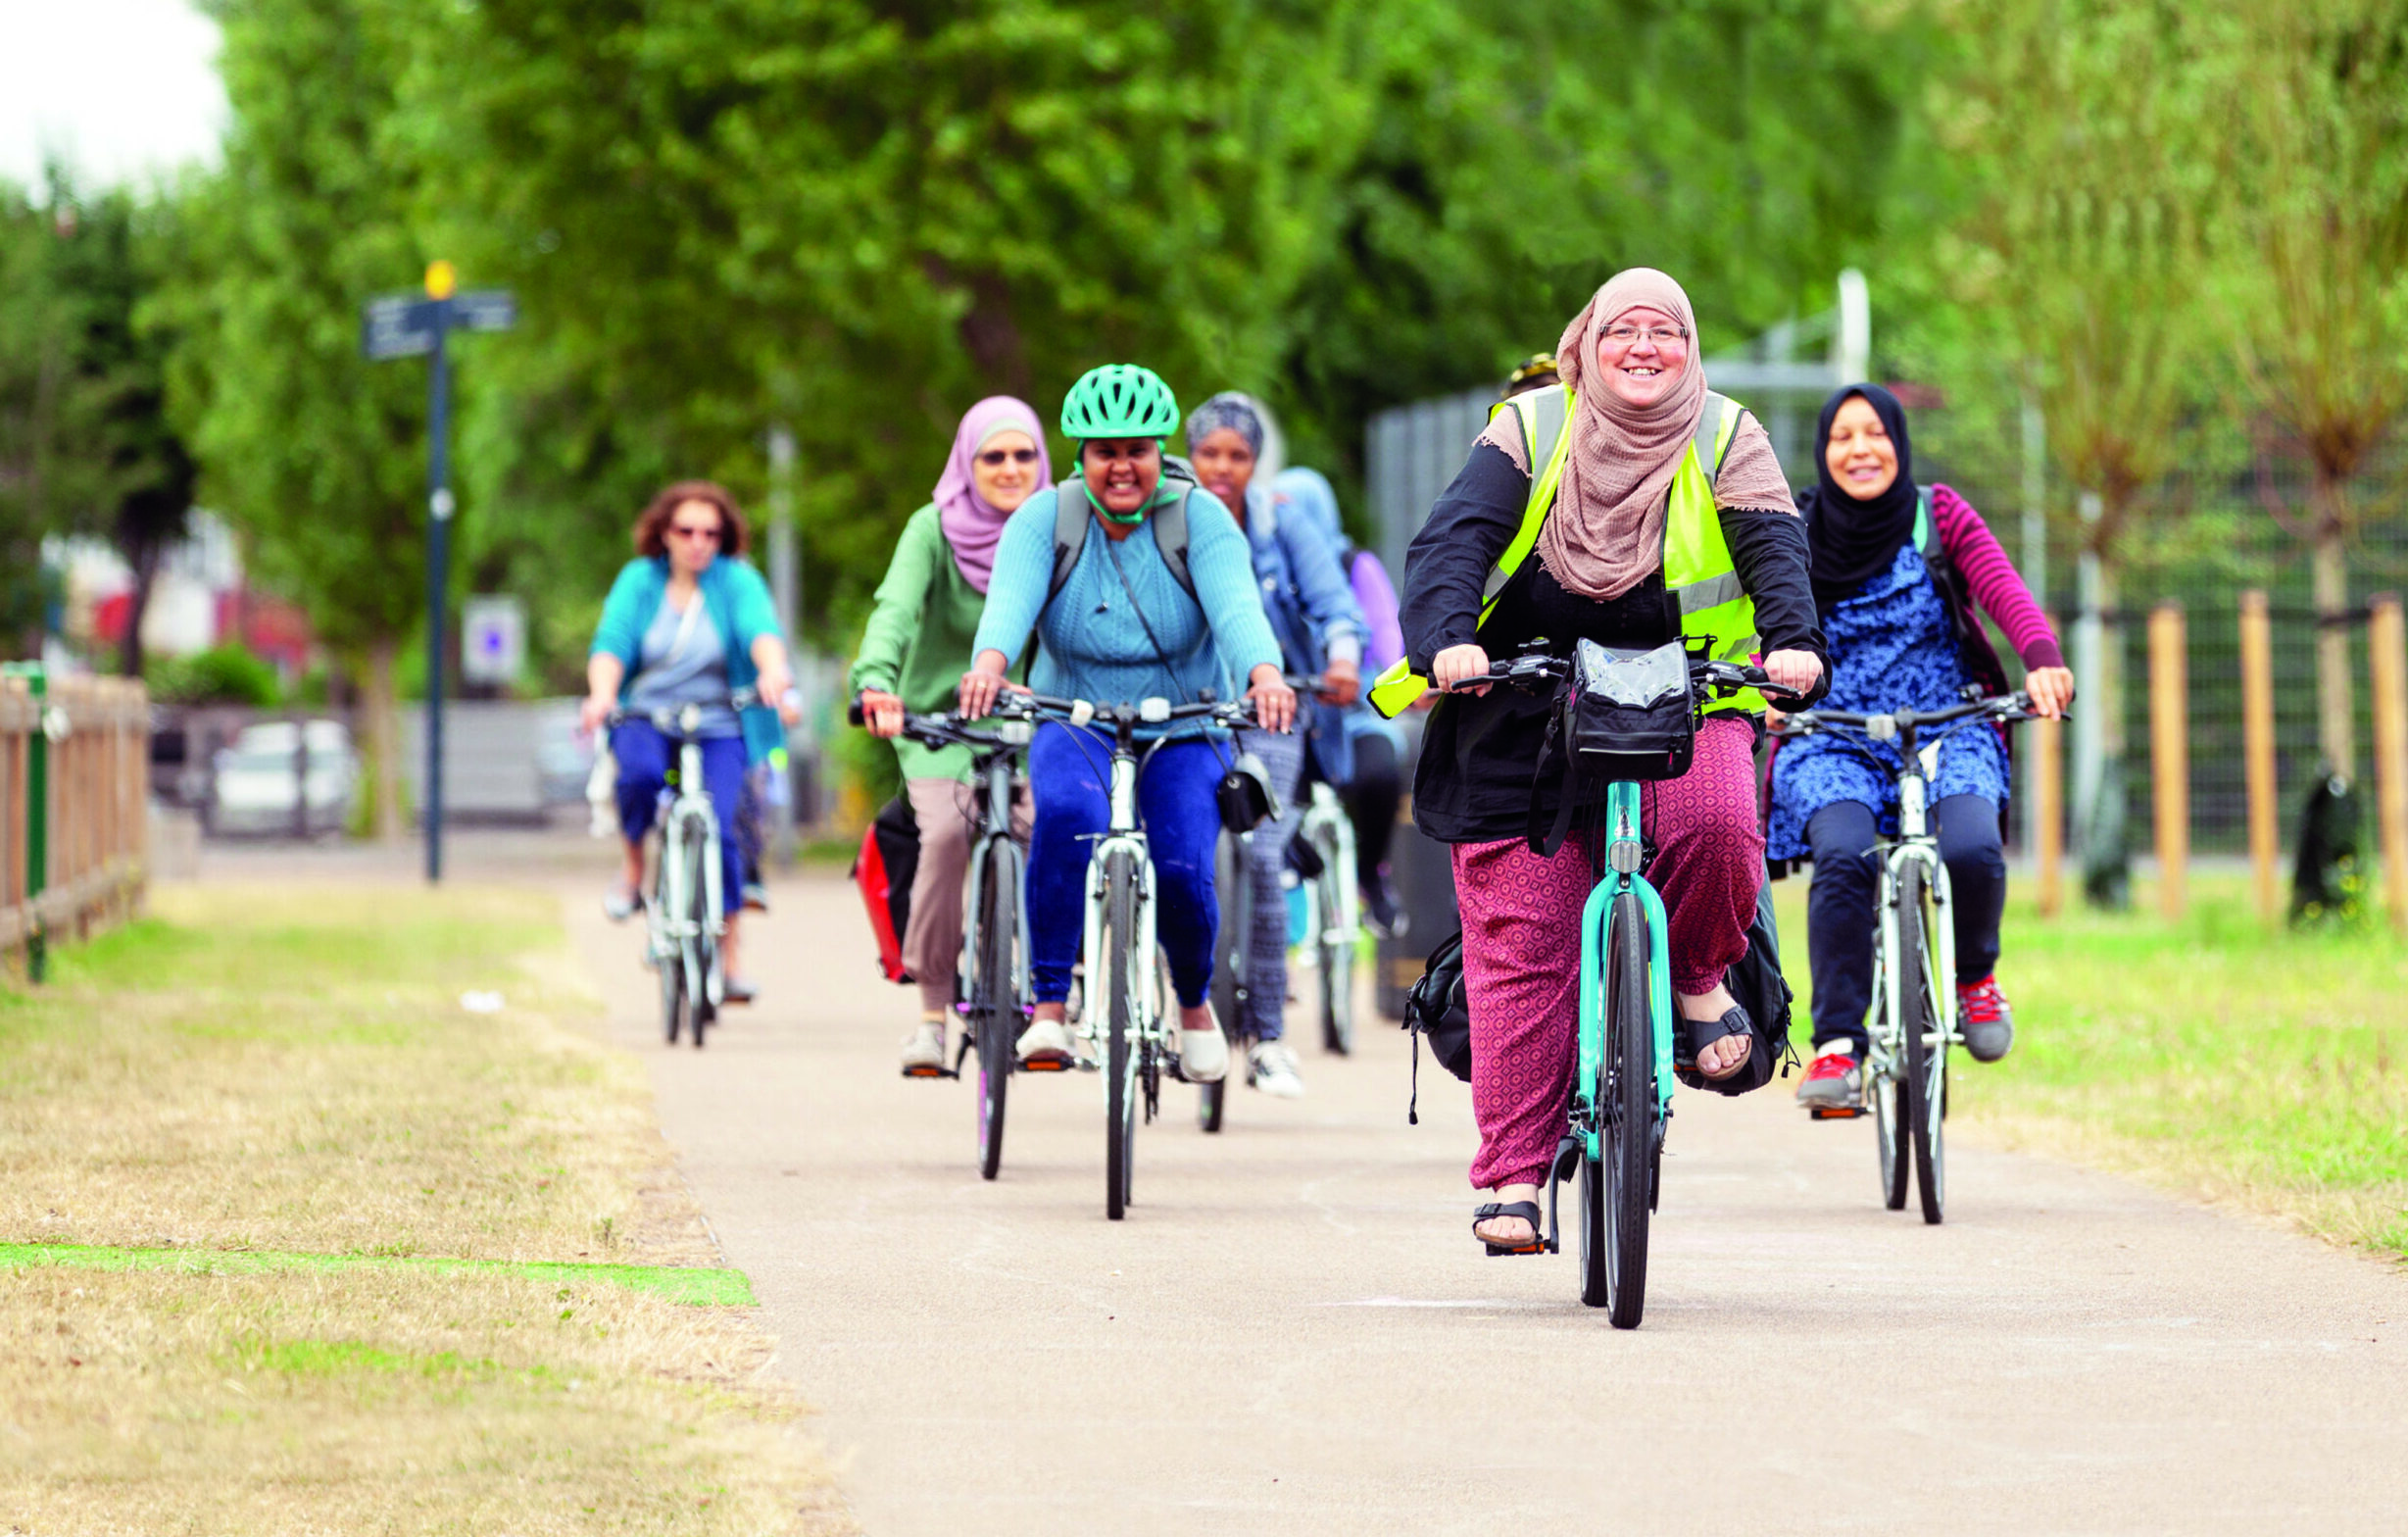 JoyRiders woman Mariam Sayed cycling, leading ride